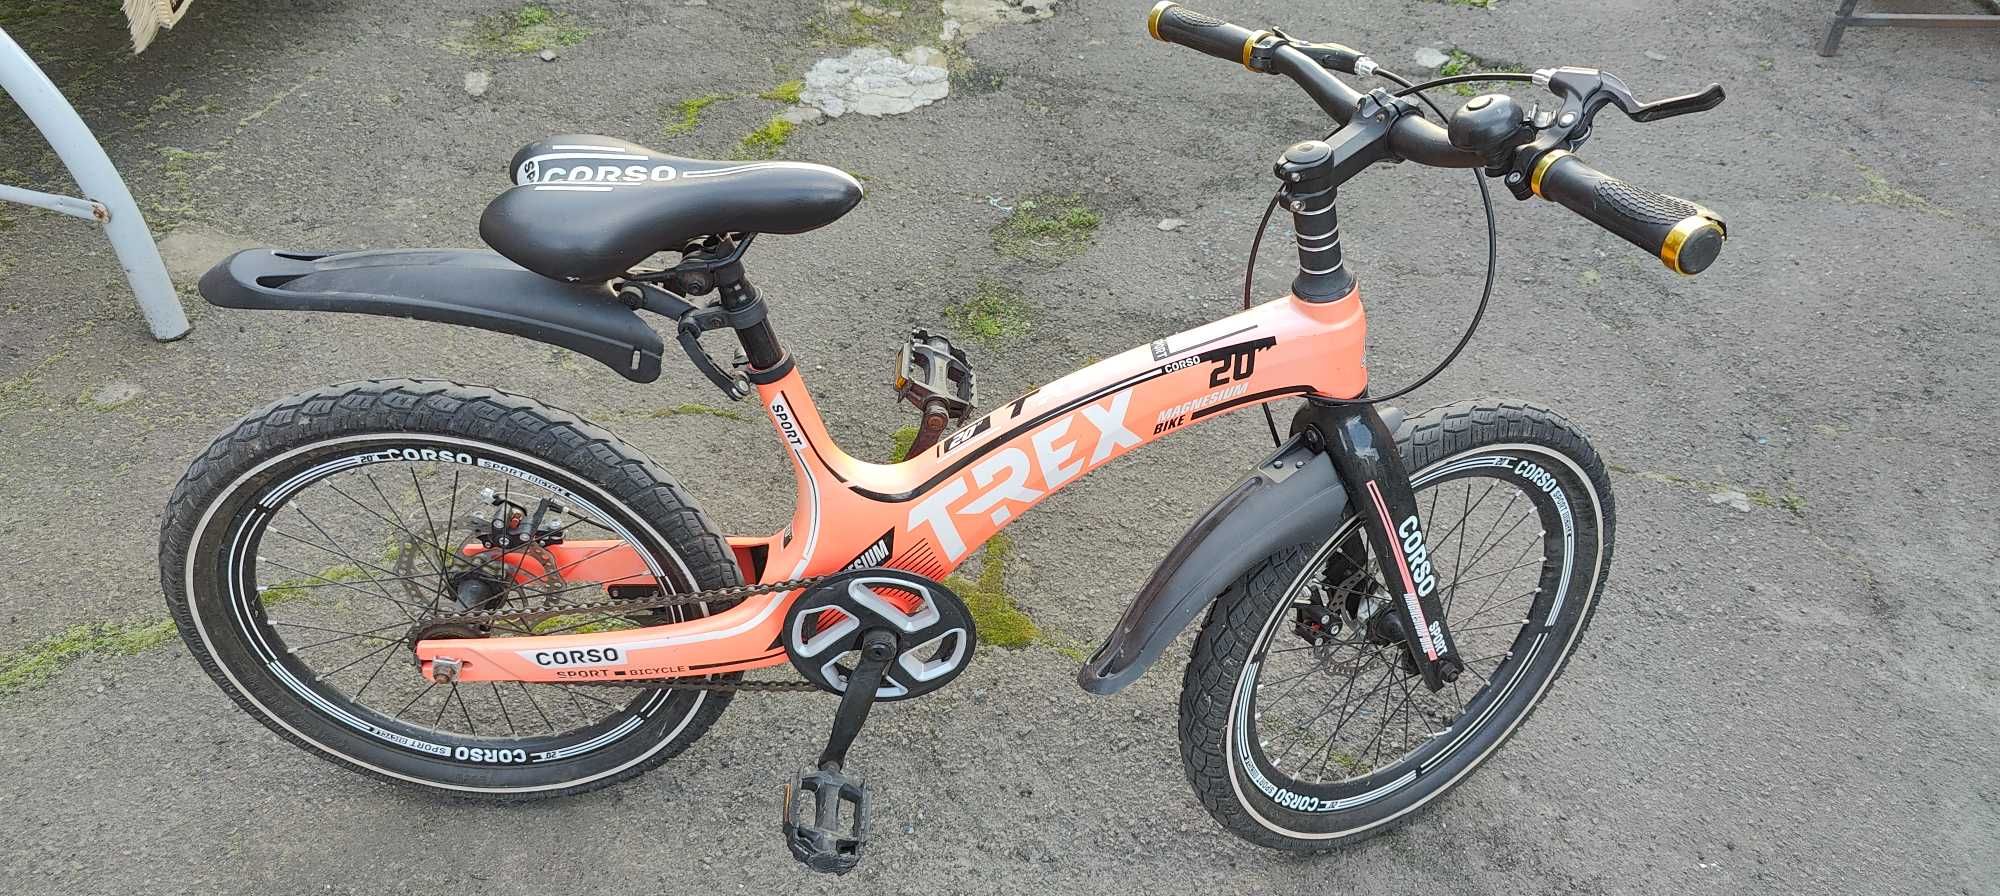 Corso t-rex 20" 20 дюймов велосипед